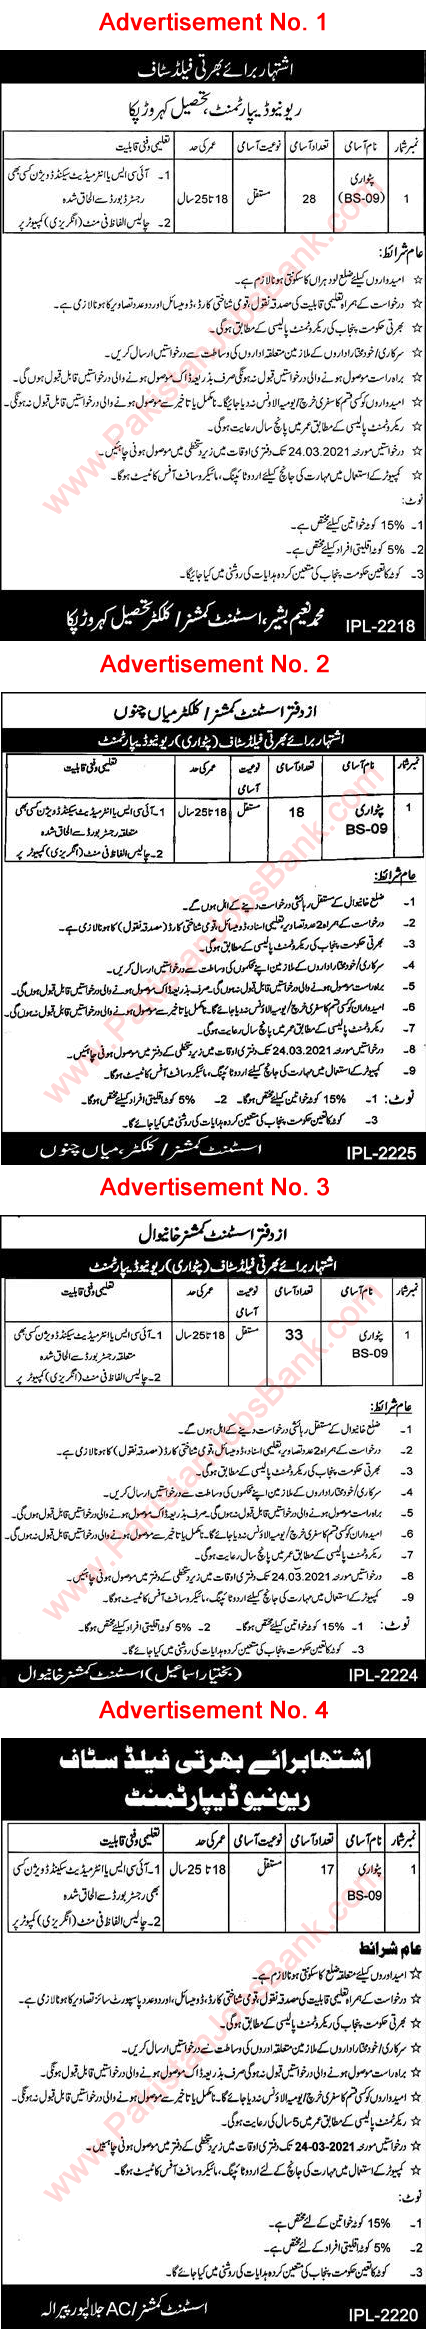 Patwari Jobs in Revenue Department Punjab 2021 March Latest